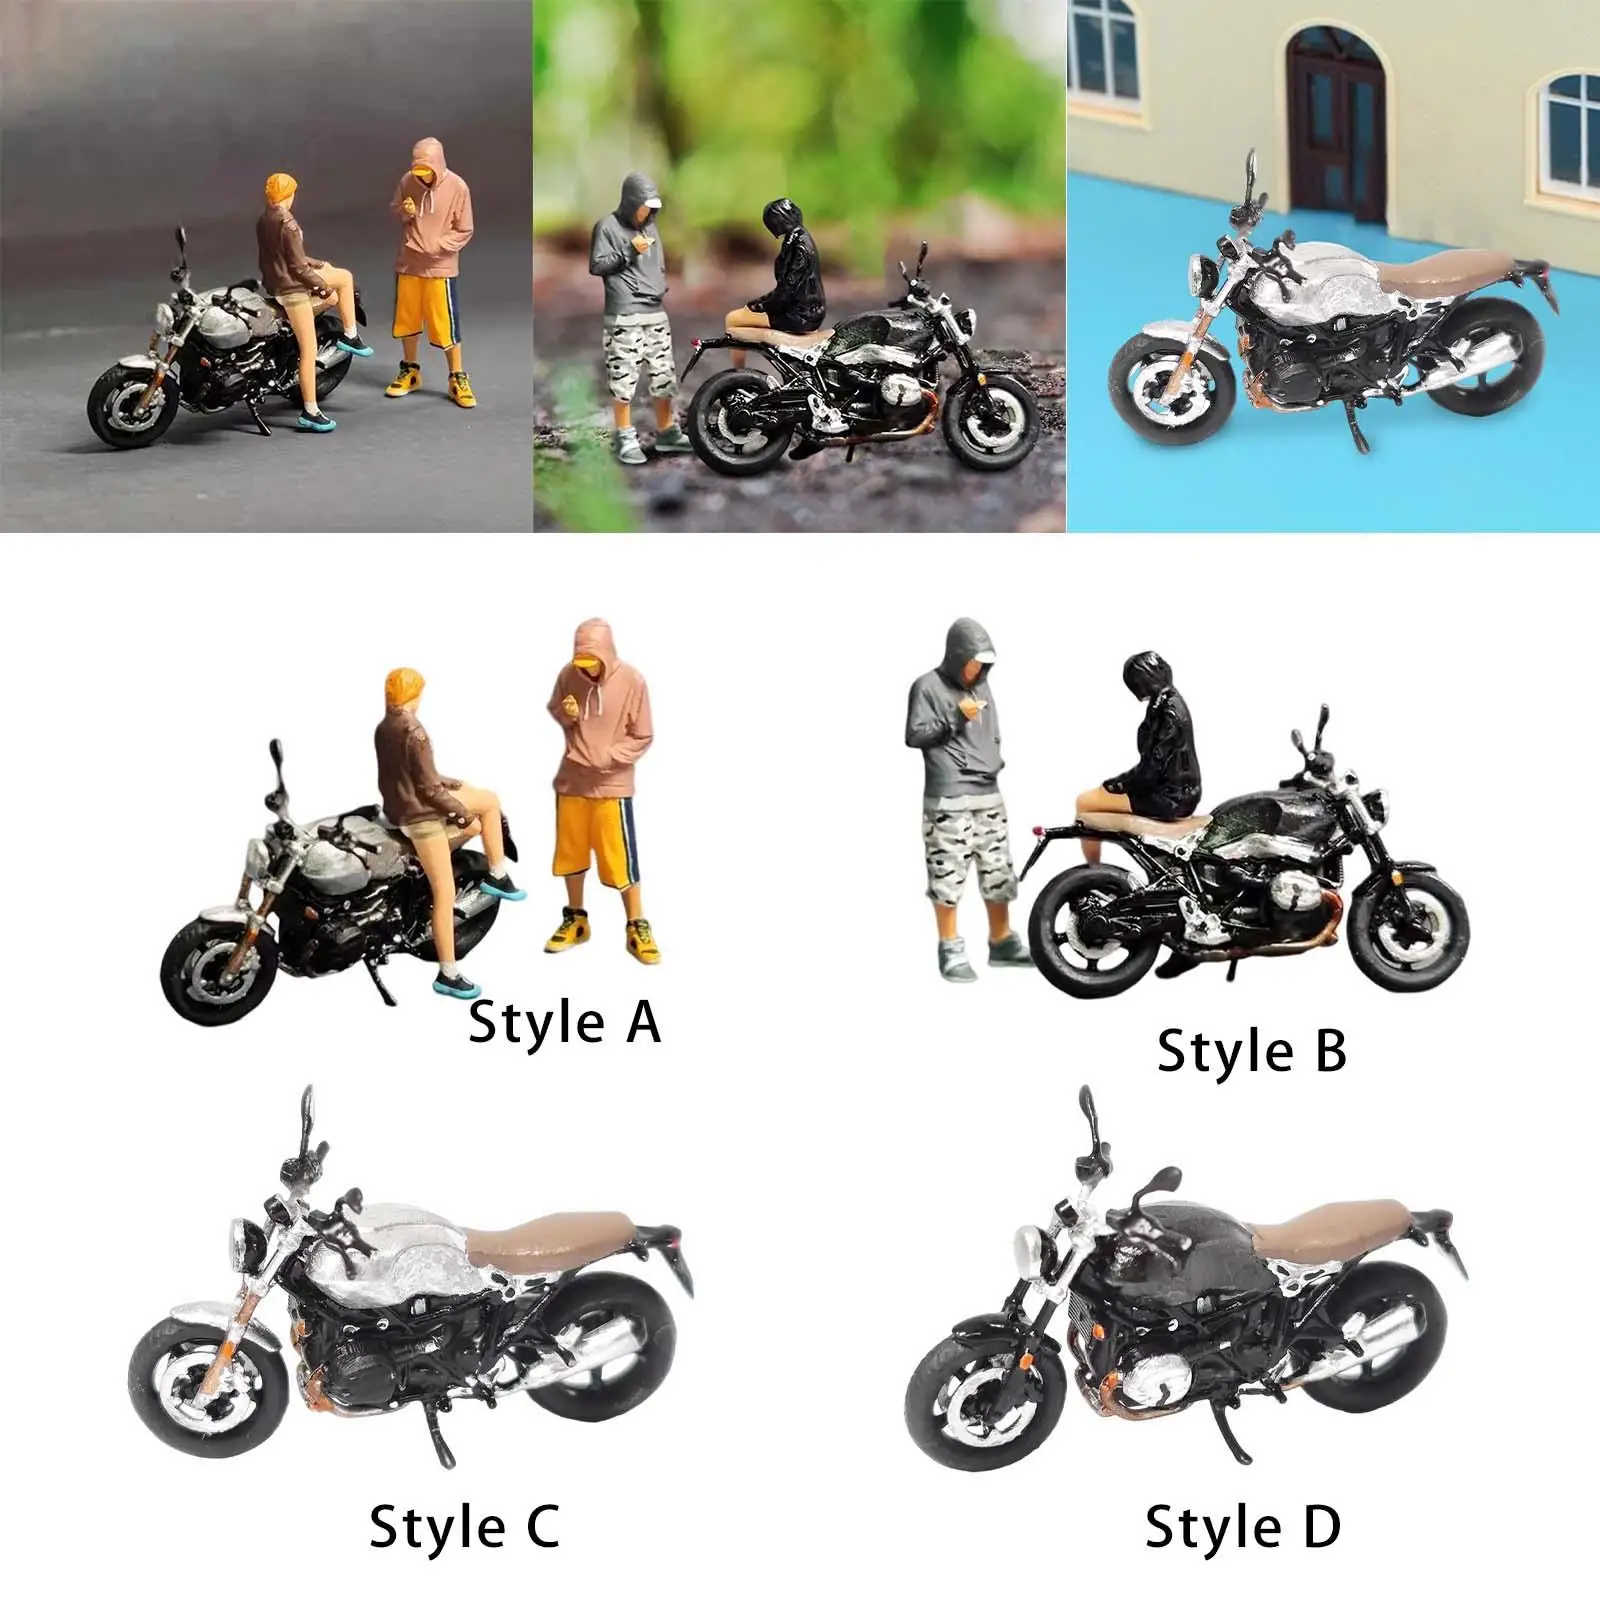 1/64 Figures Motorcycle Micro Landscape Street Scene Diorama Scenery Layout